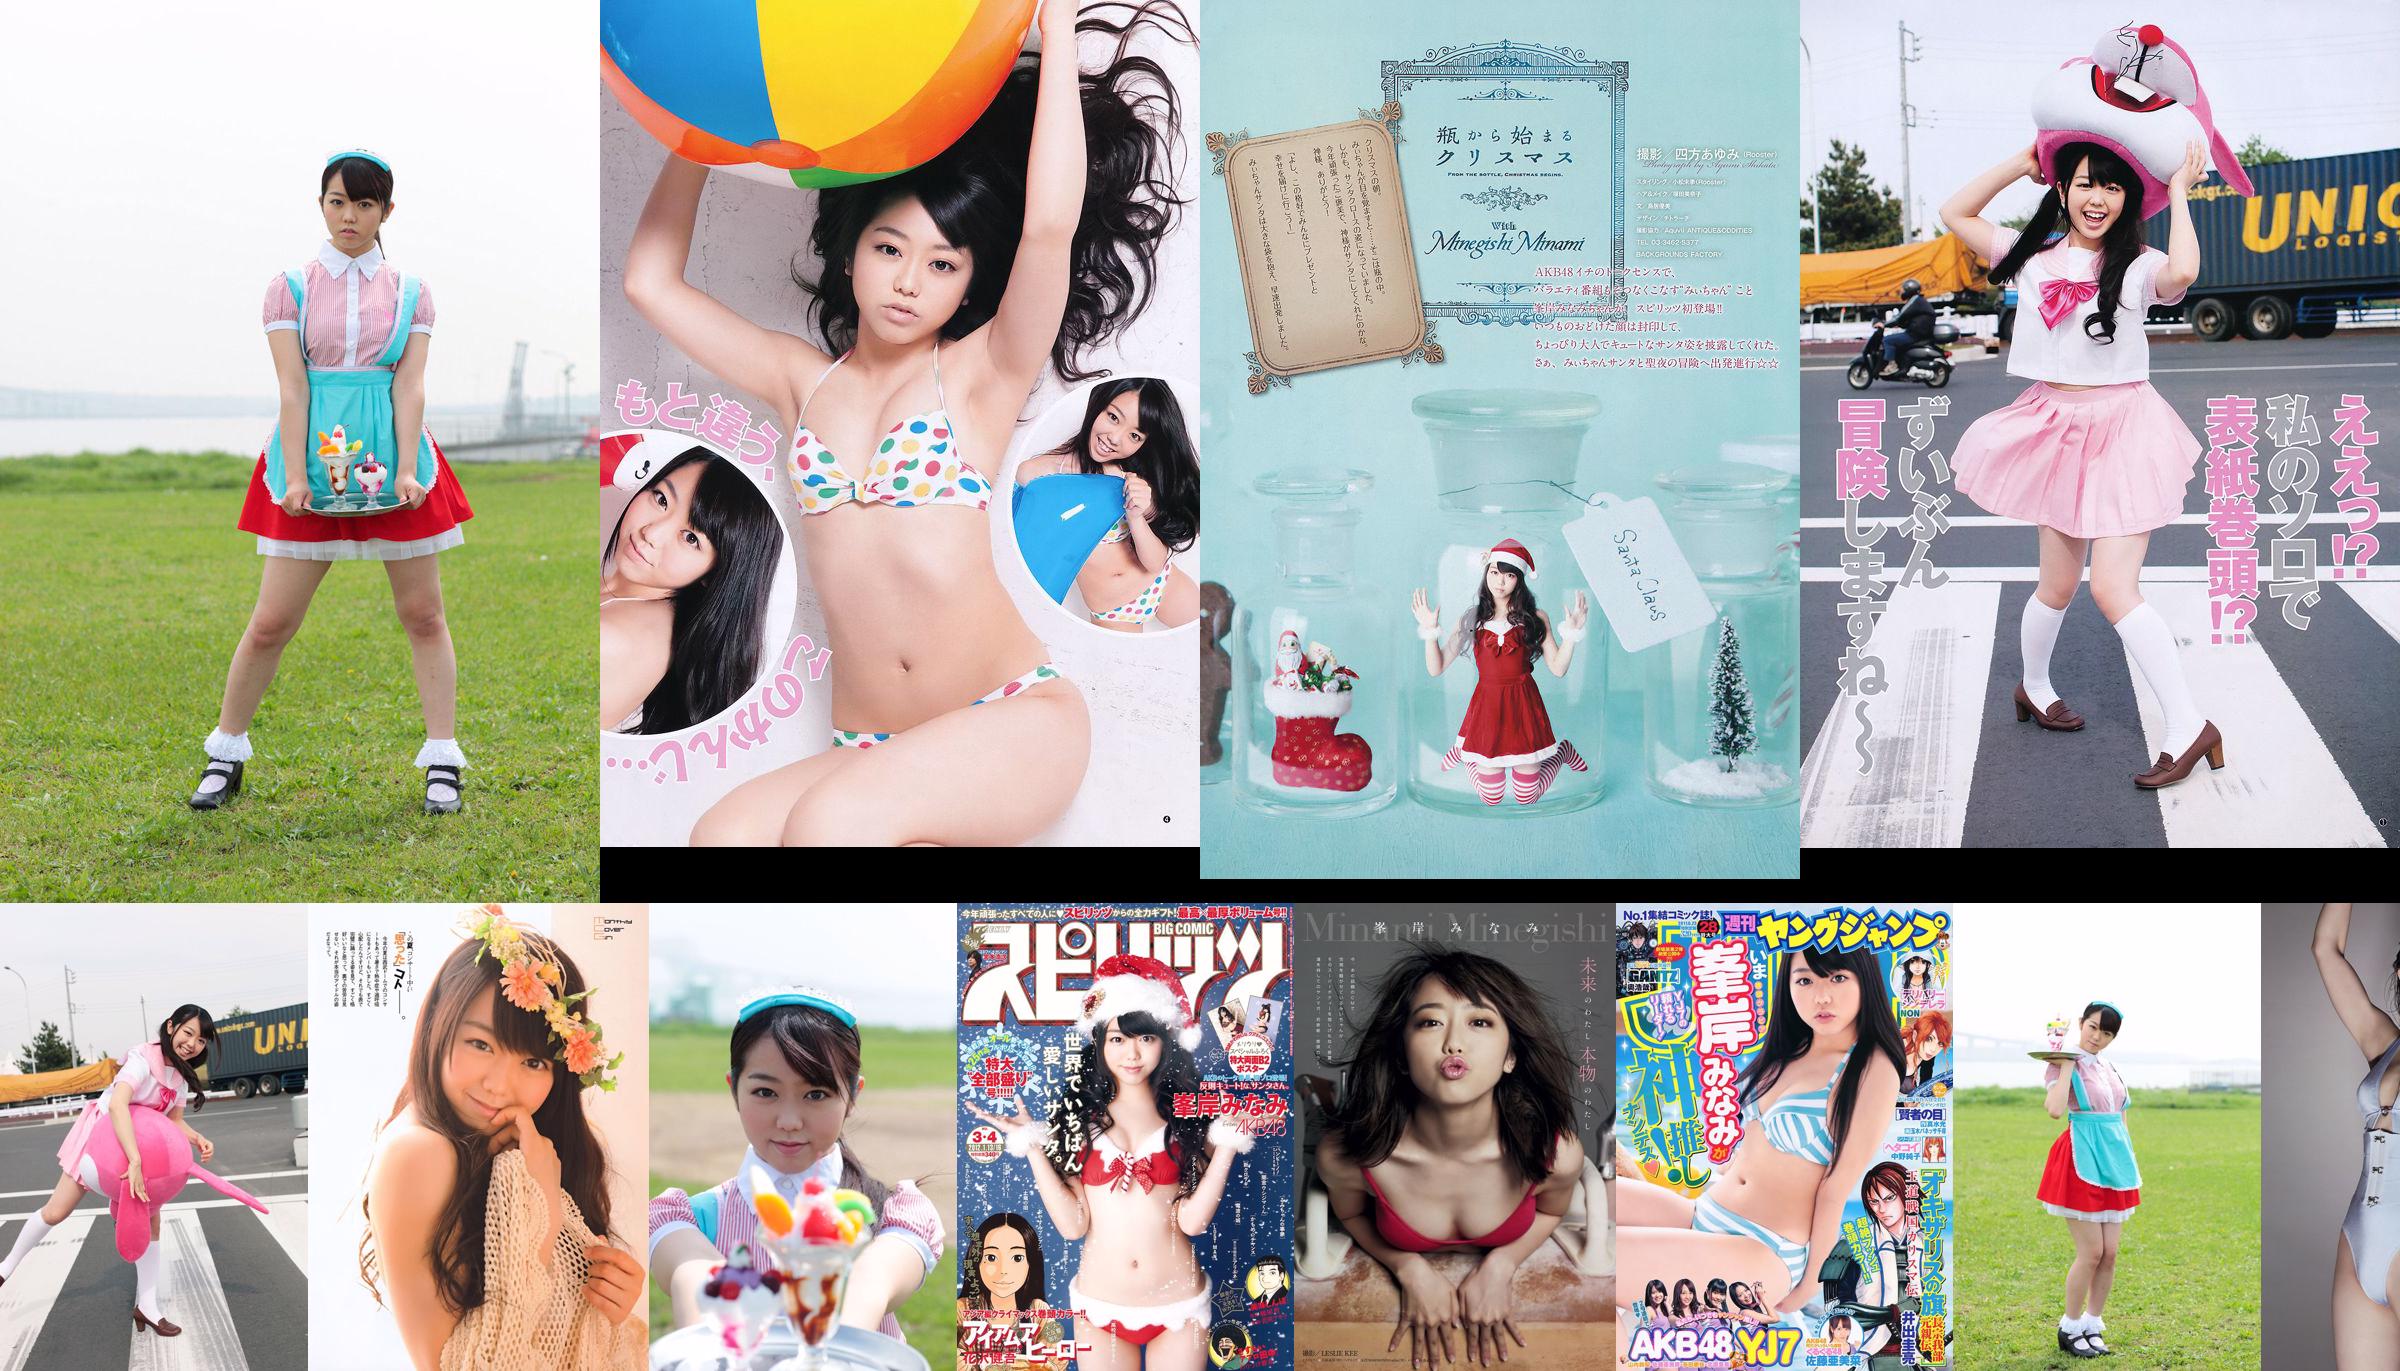 [Grands esprits de la bande dessinée hebdomadaire] Minaki Minegishi 2012 N ° 03-04 Photo Magazine No.c6e8b8 Page 4